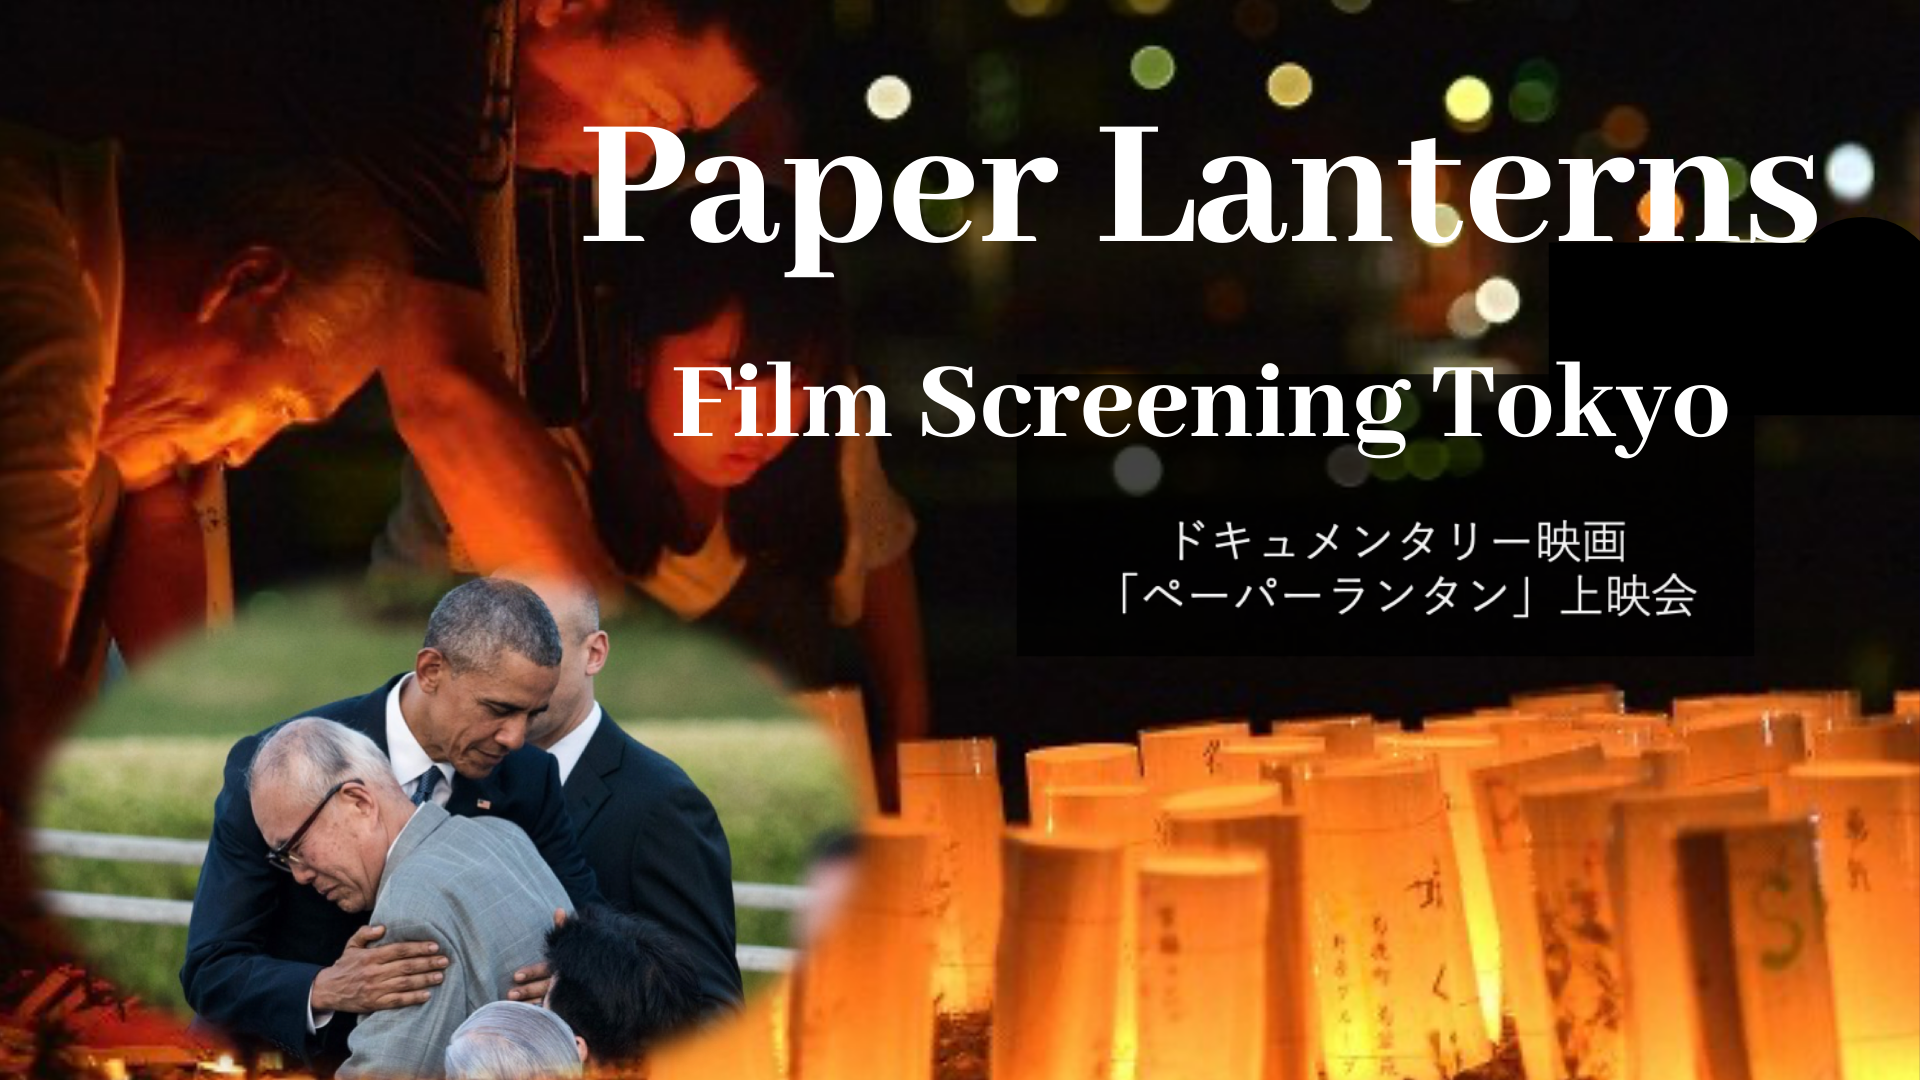 Paper Lanterns Film Screening in Tokyo event art